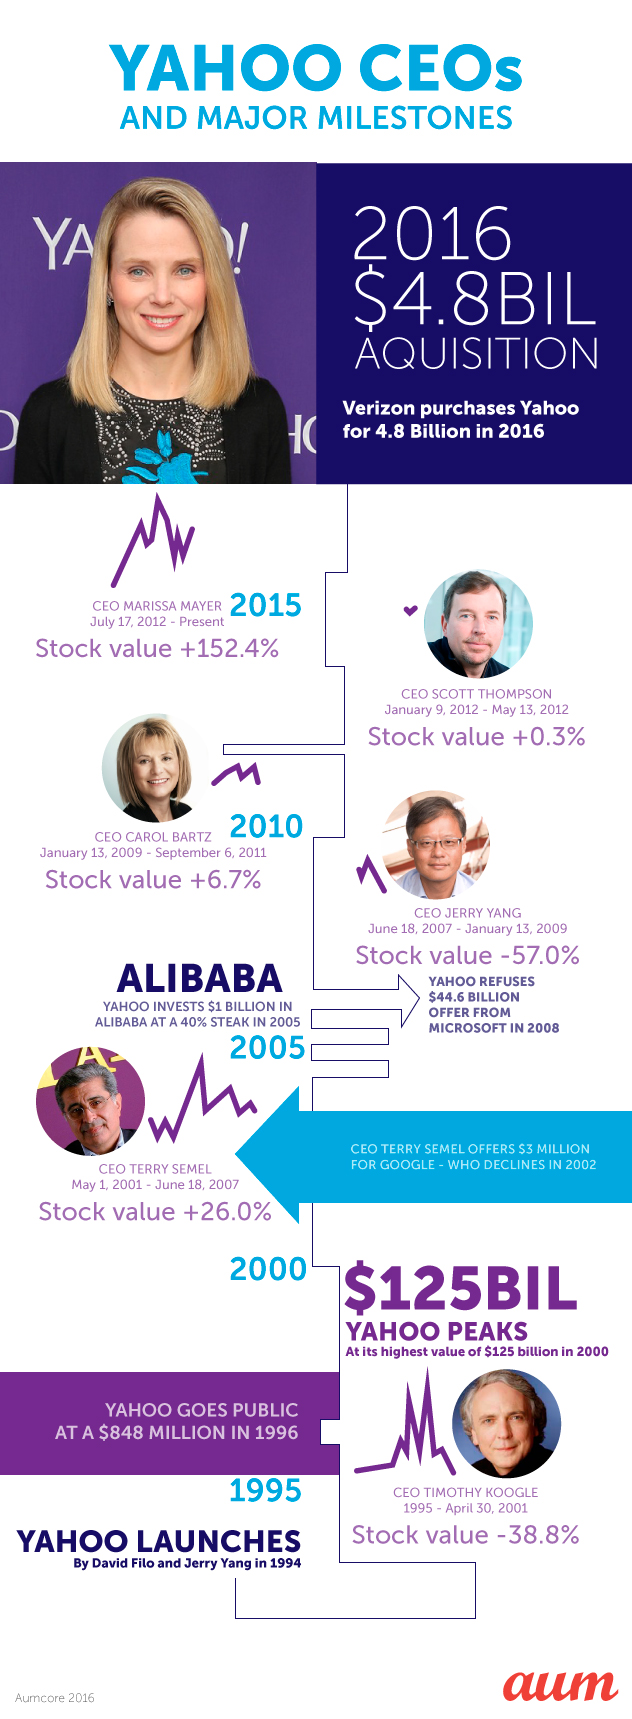 Yahoo’s success and failures